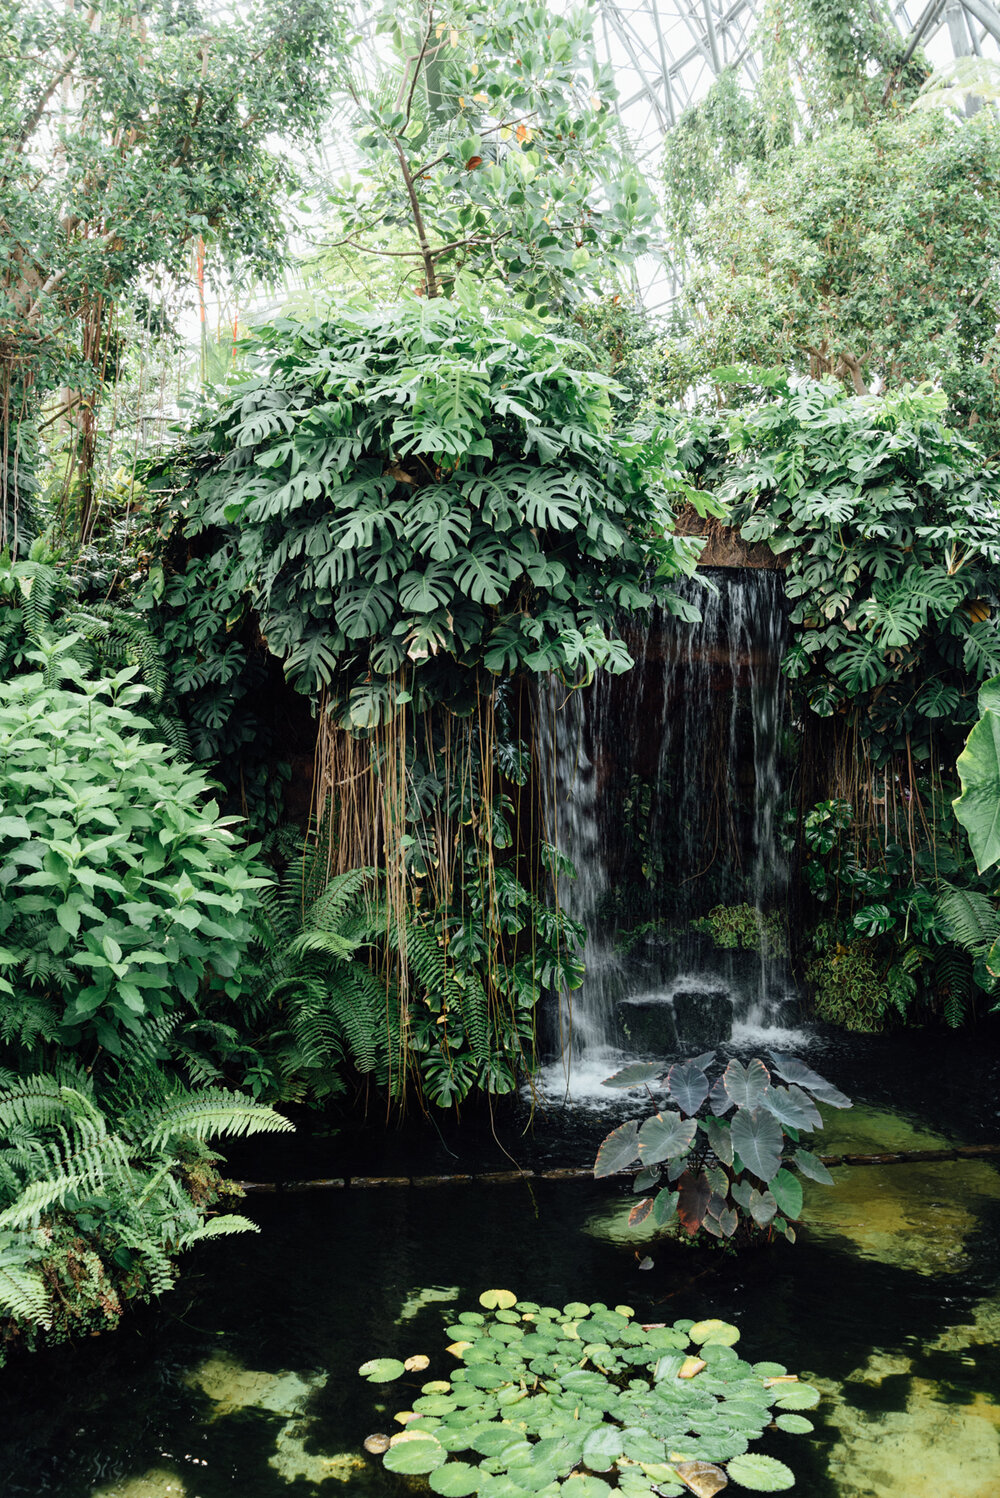 夢の島 熱帯 植物 館